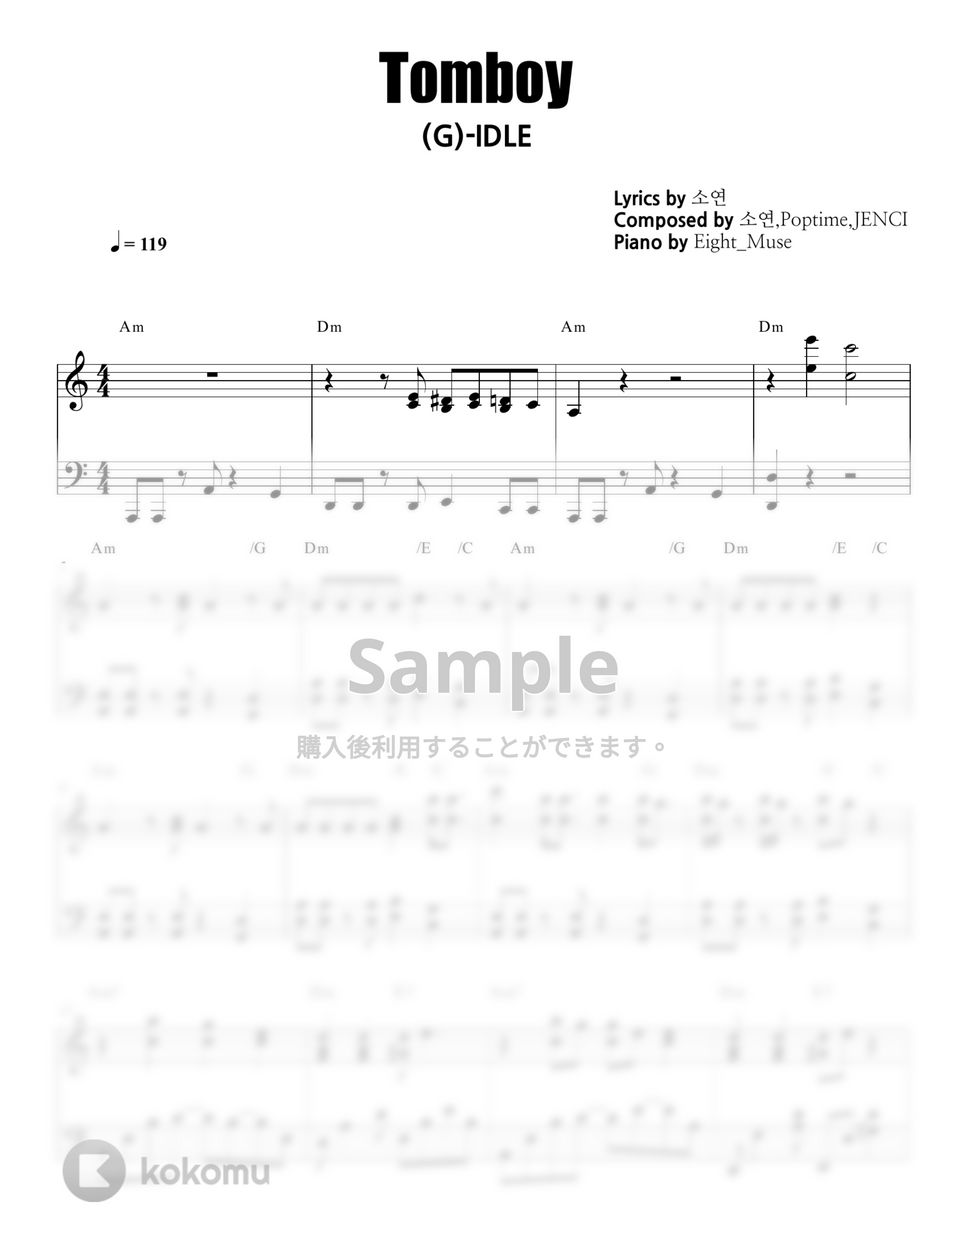 (G)-IDLE(여자아이들) - Tomboy (原キー・簡単キー) by Eight_Muse